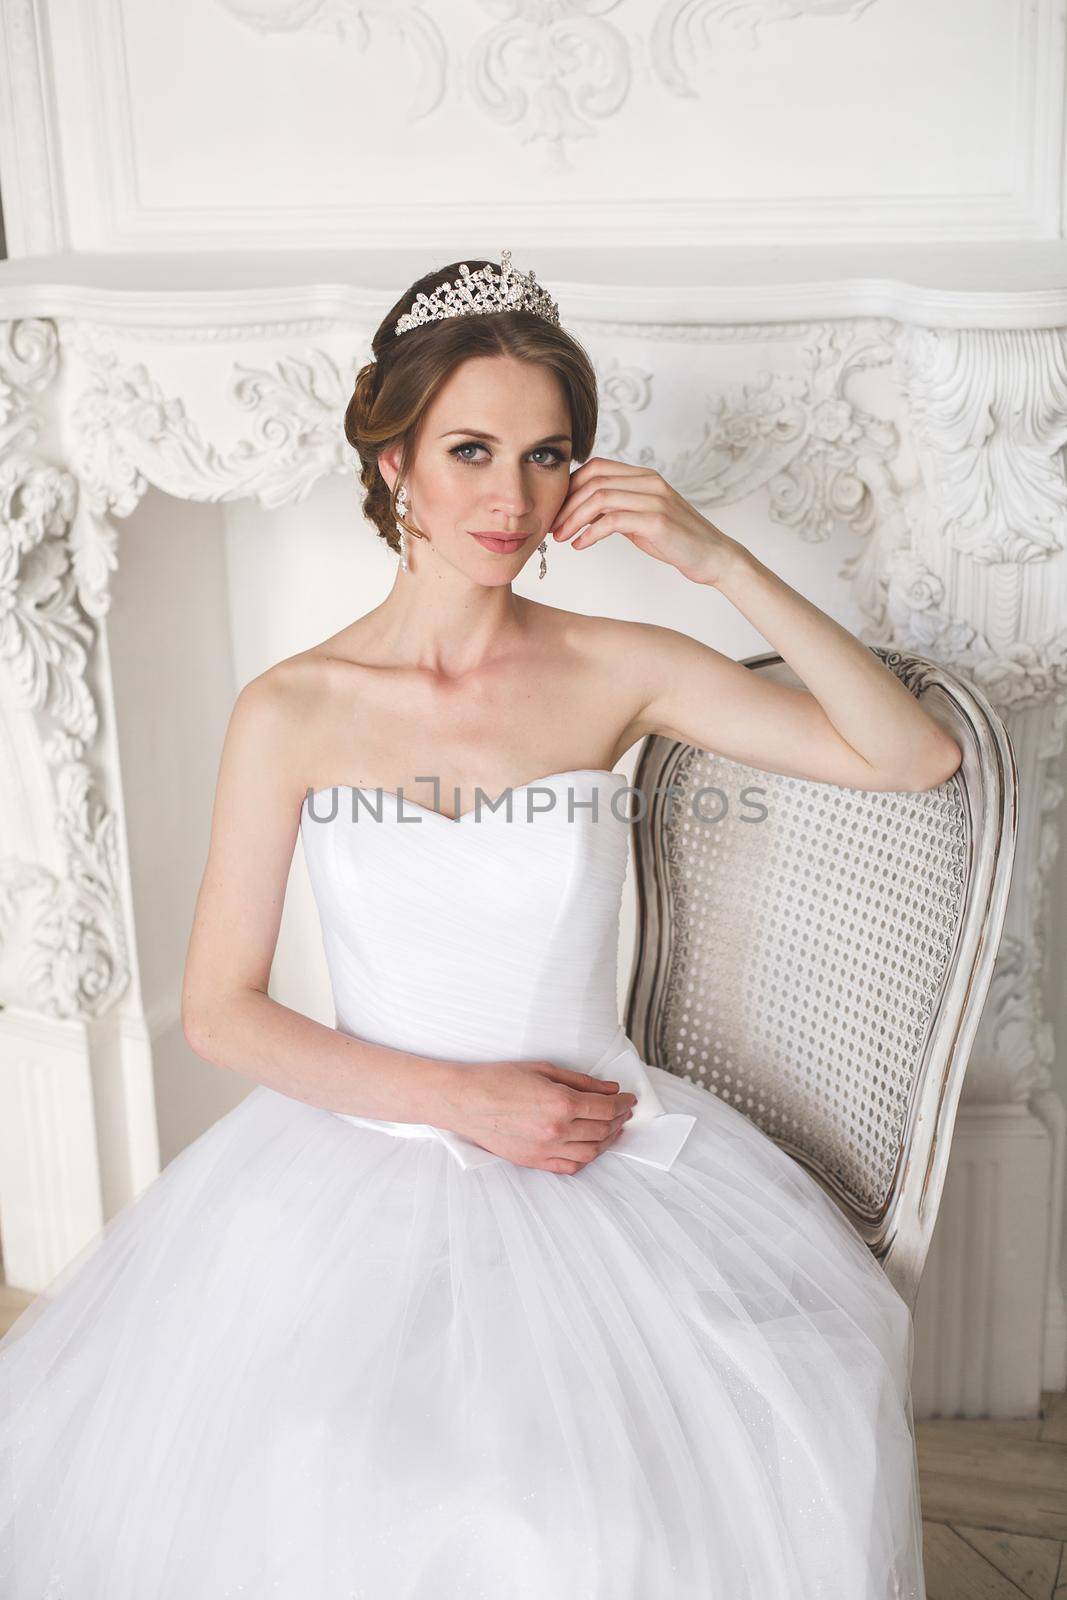 Beautiful bride posing in wedding dress in a white photo Studio.